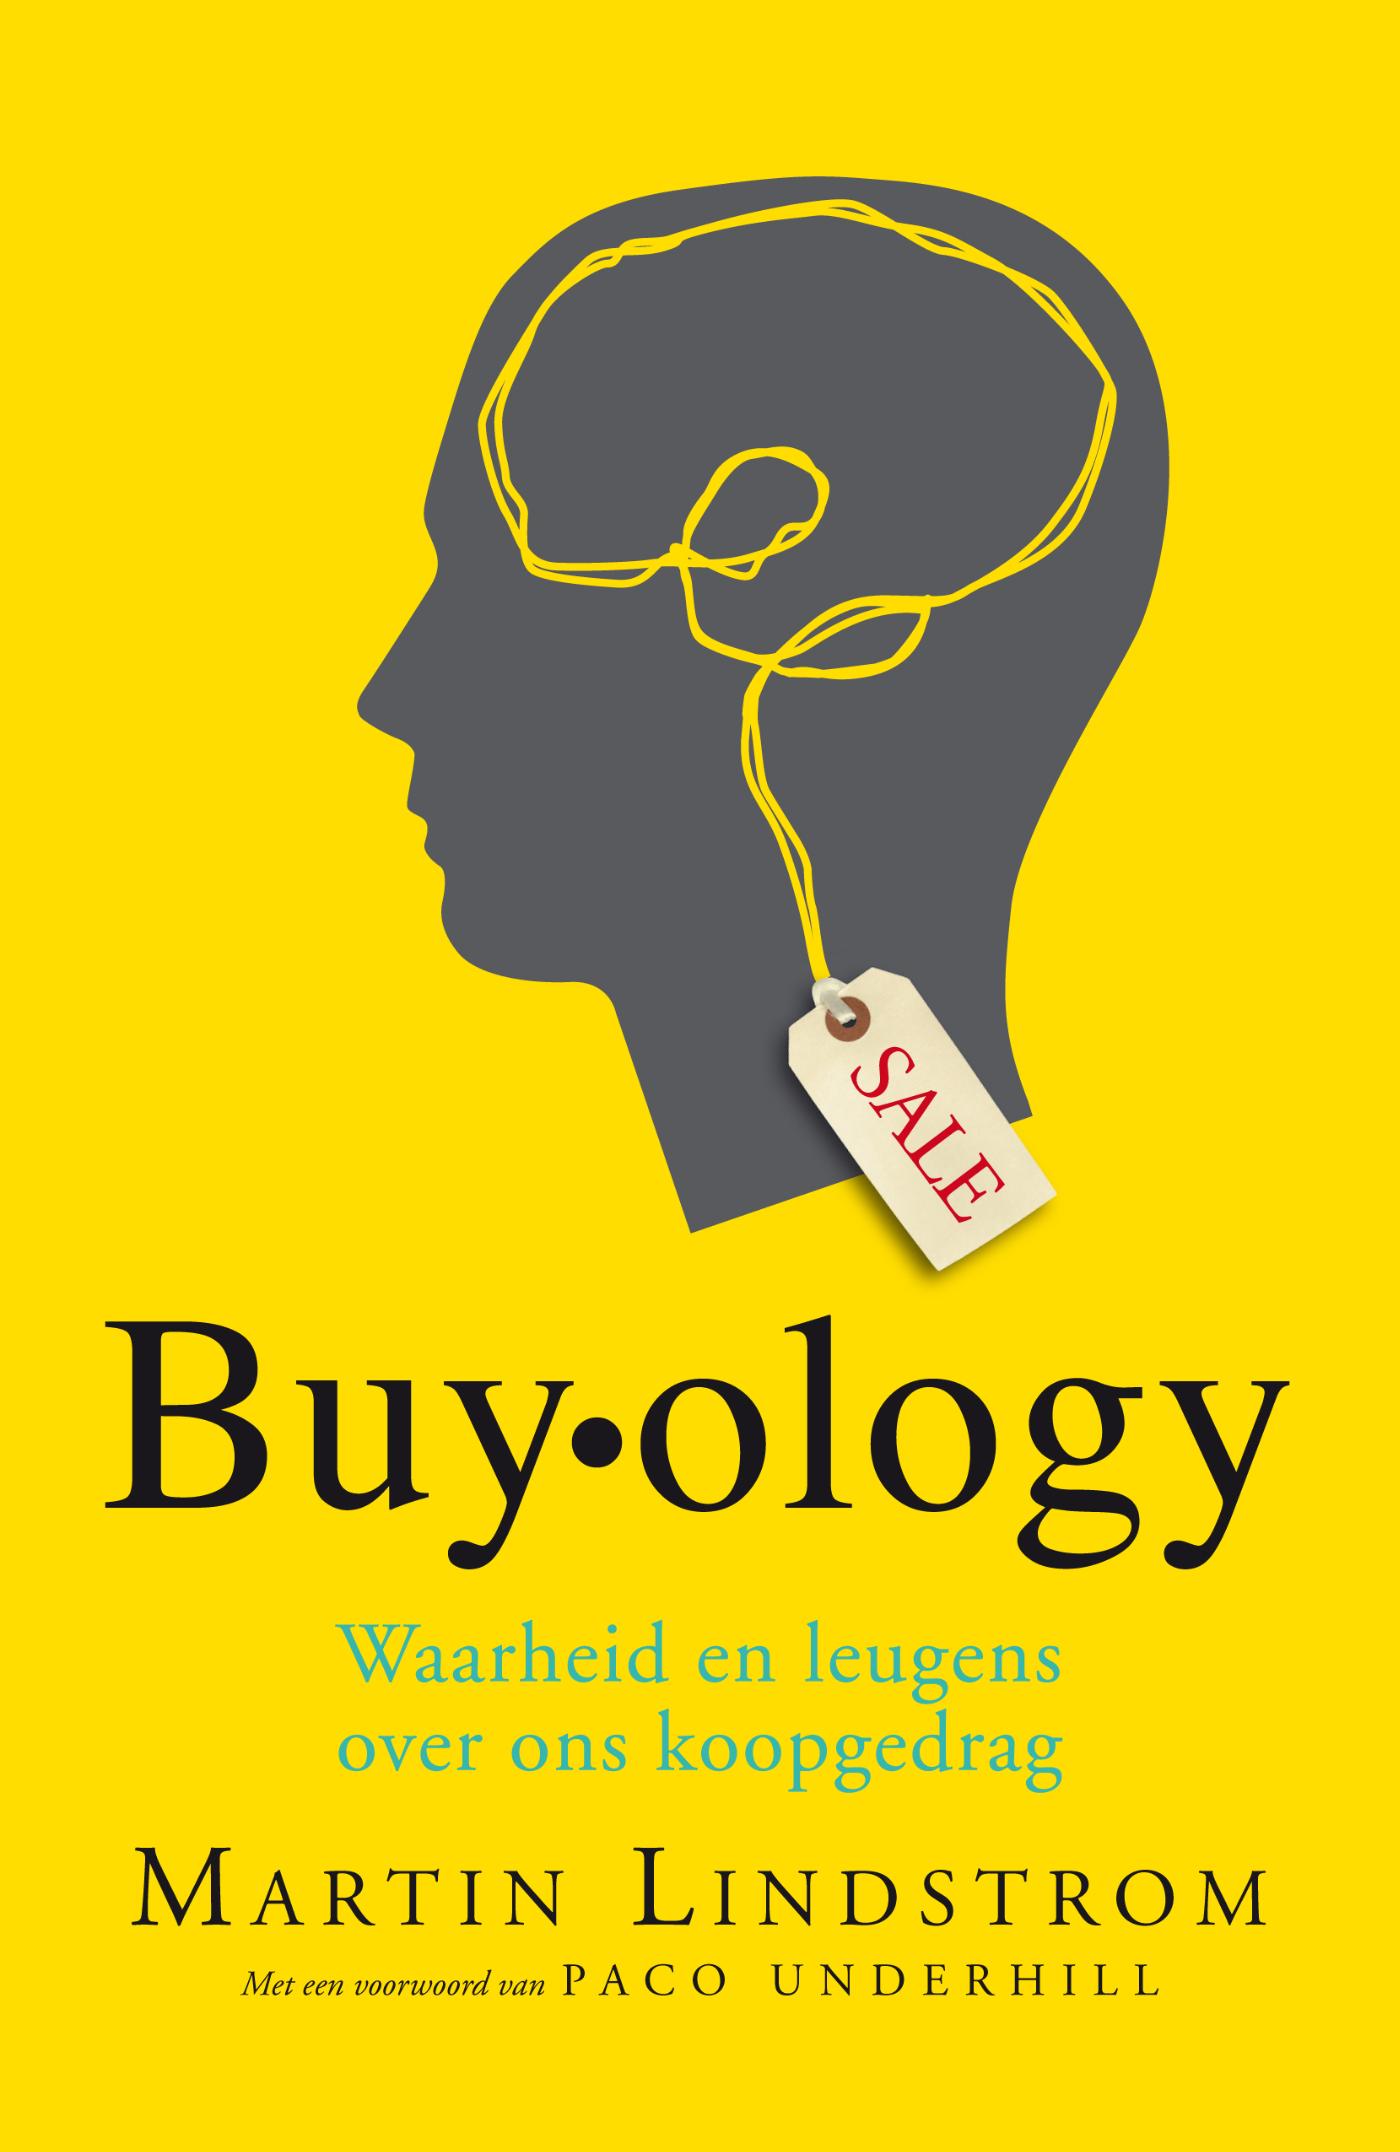 Buy-ology (Ebook)